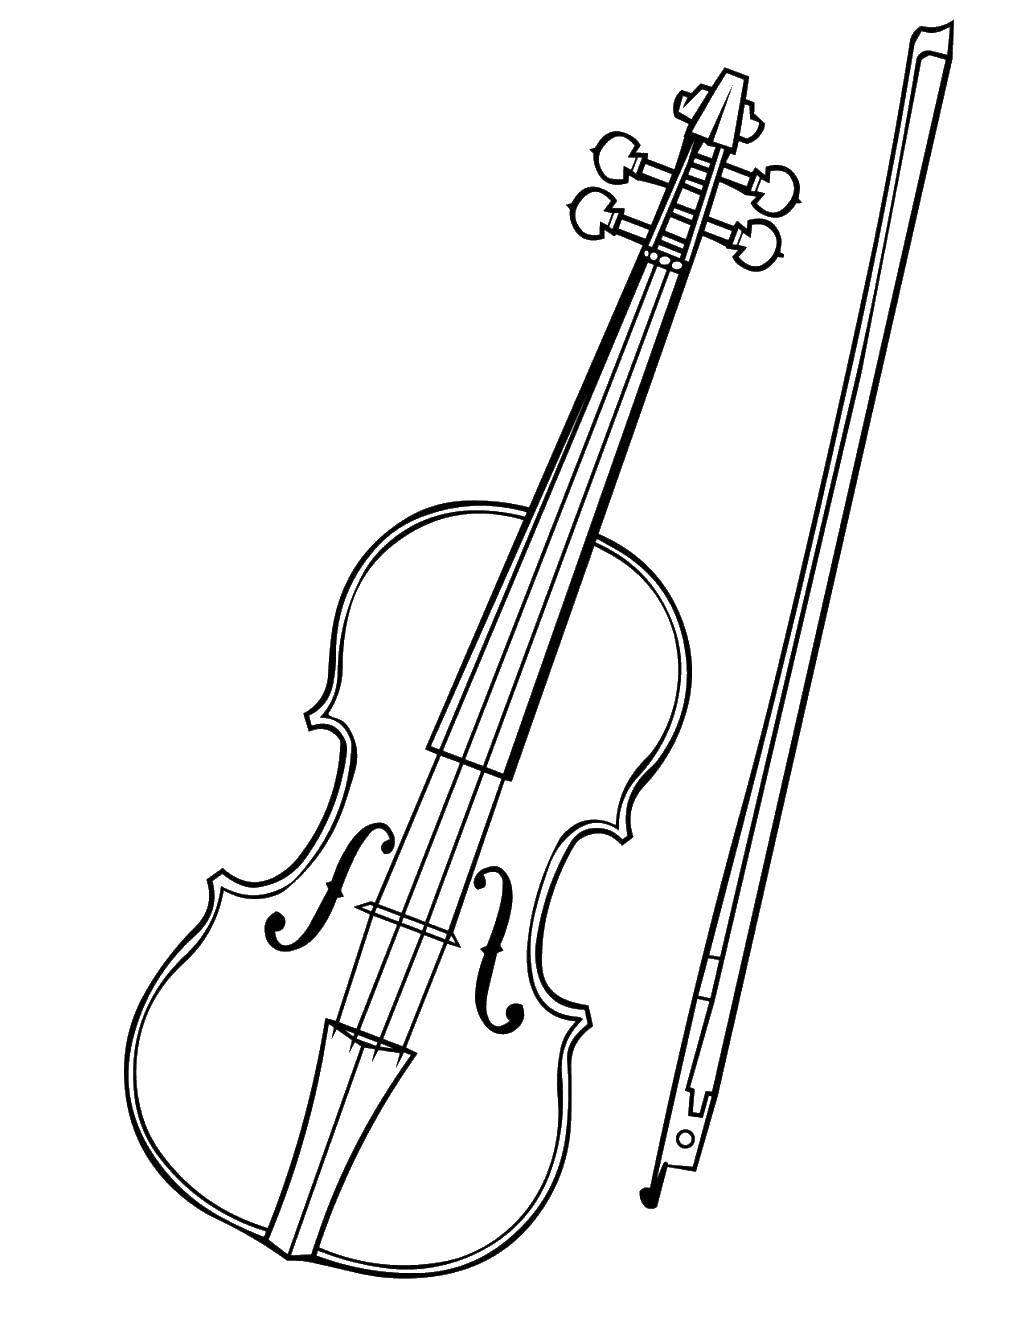 Coloring Violin. Category Music. Tags:  violin.